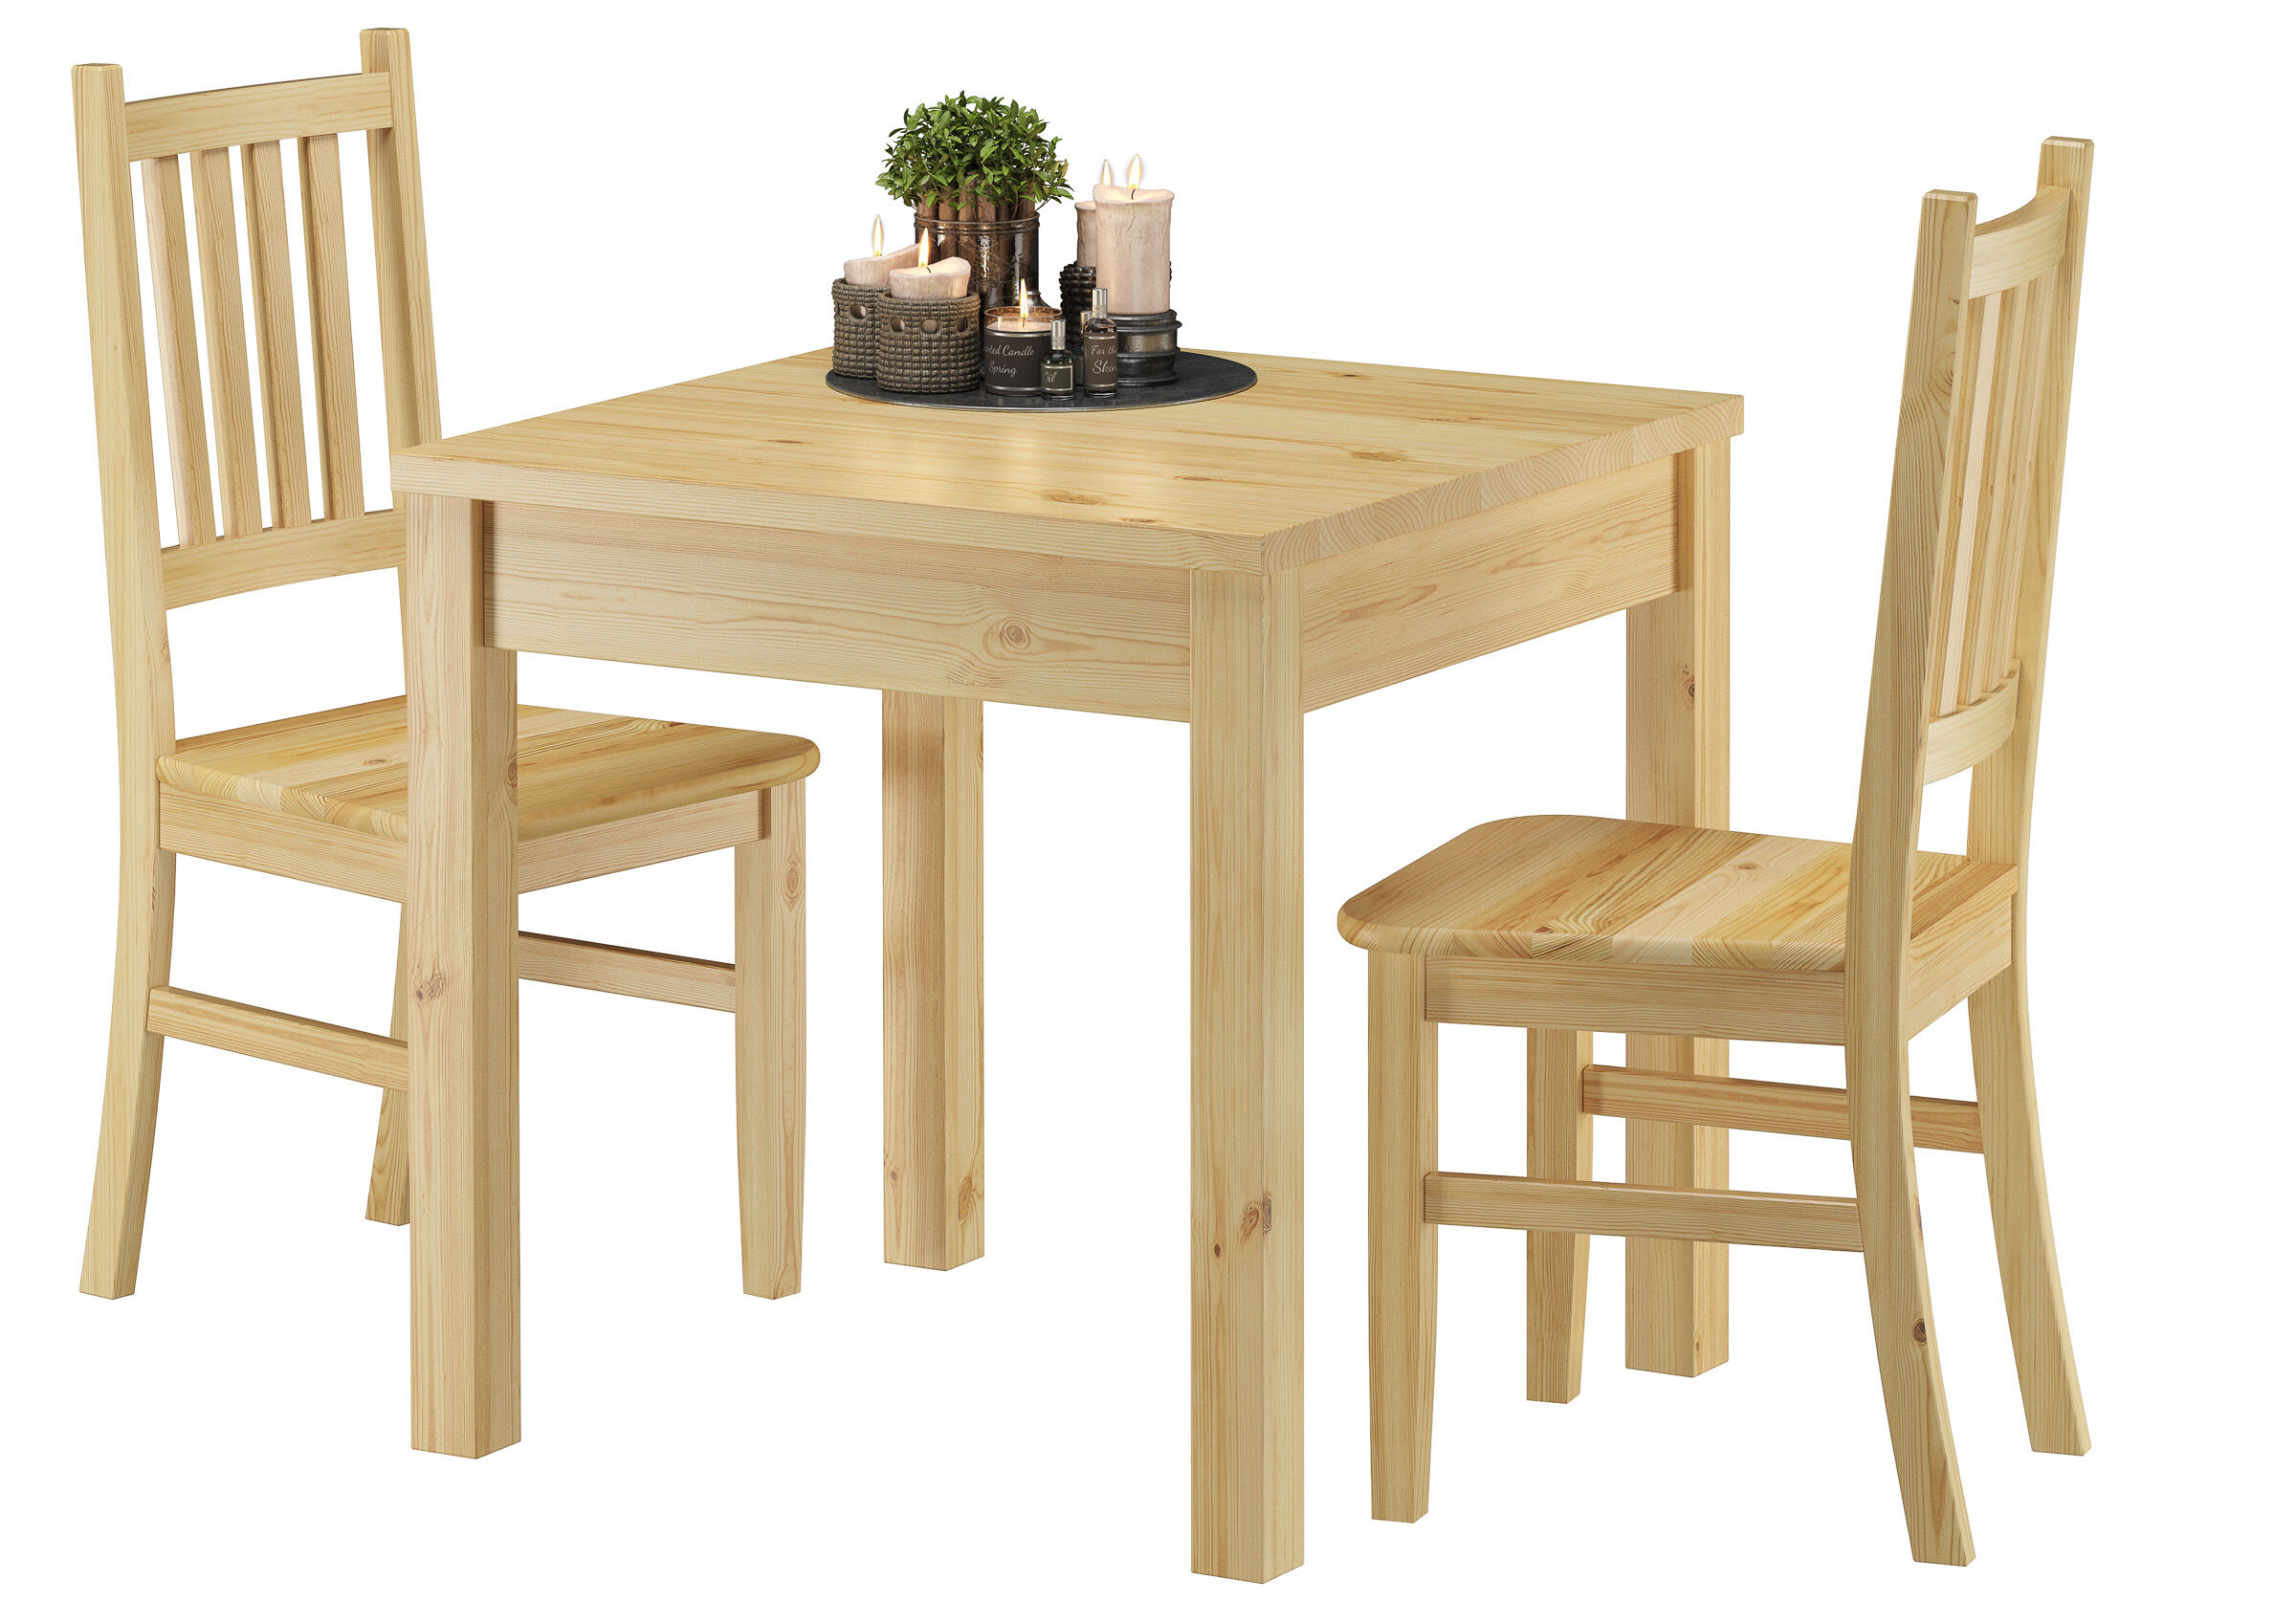 Classico design per coppia di sedie in Pino per cucina e sala da pranzo studio 90.71-01-D